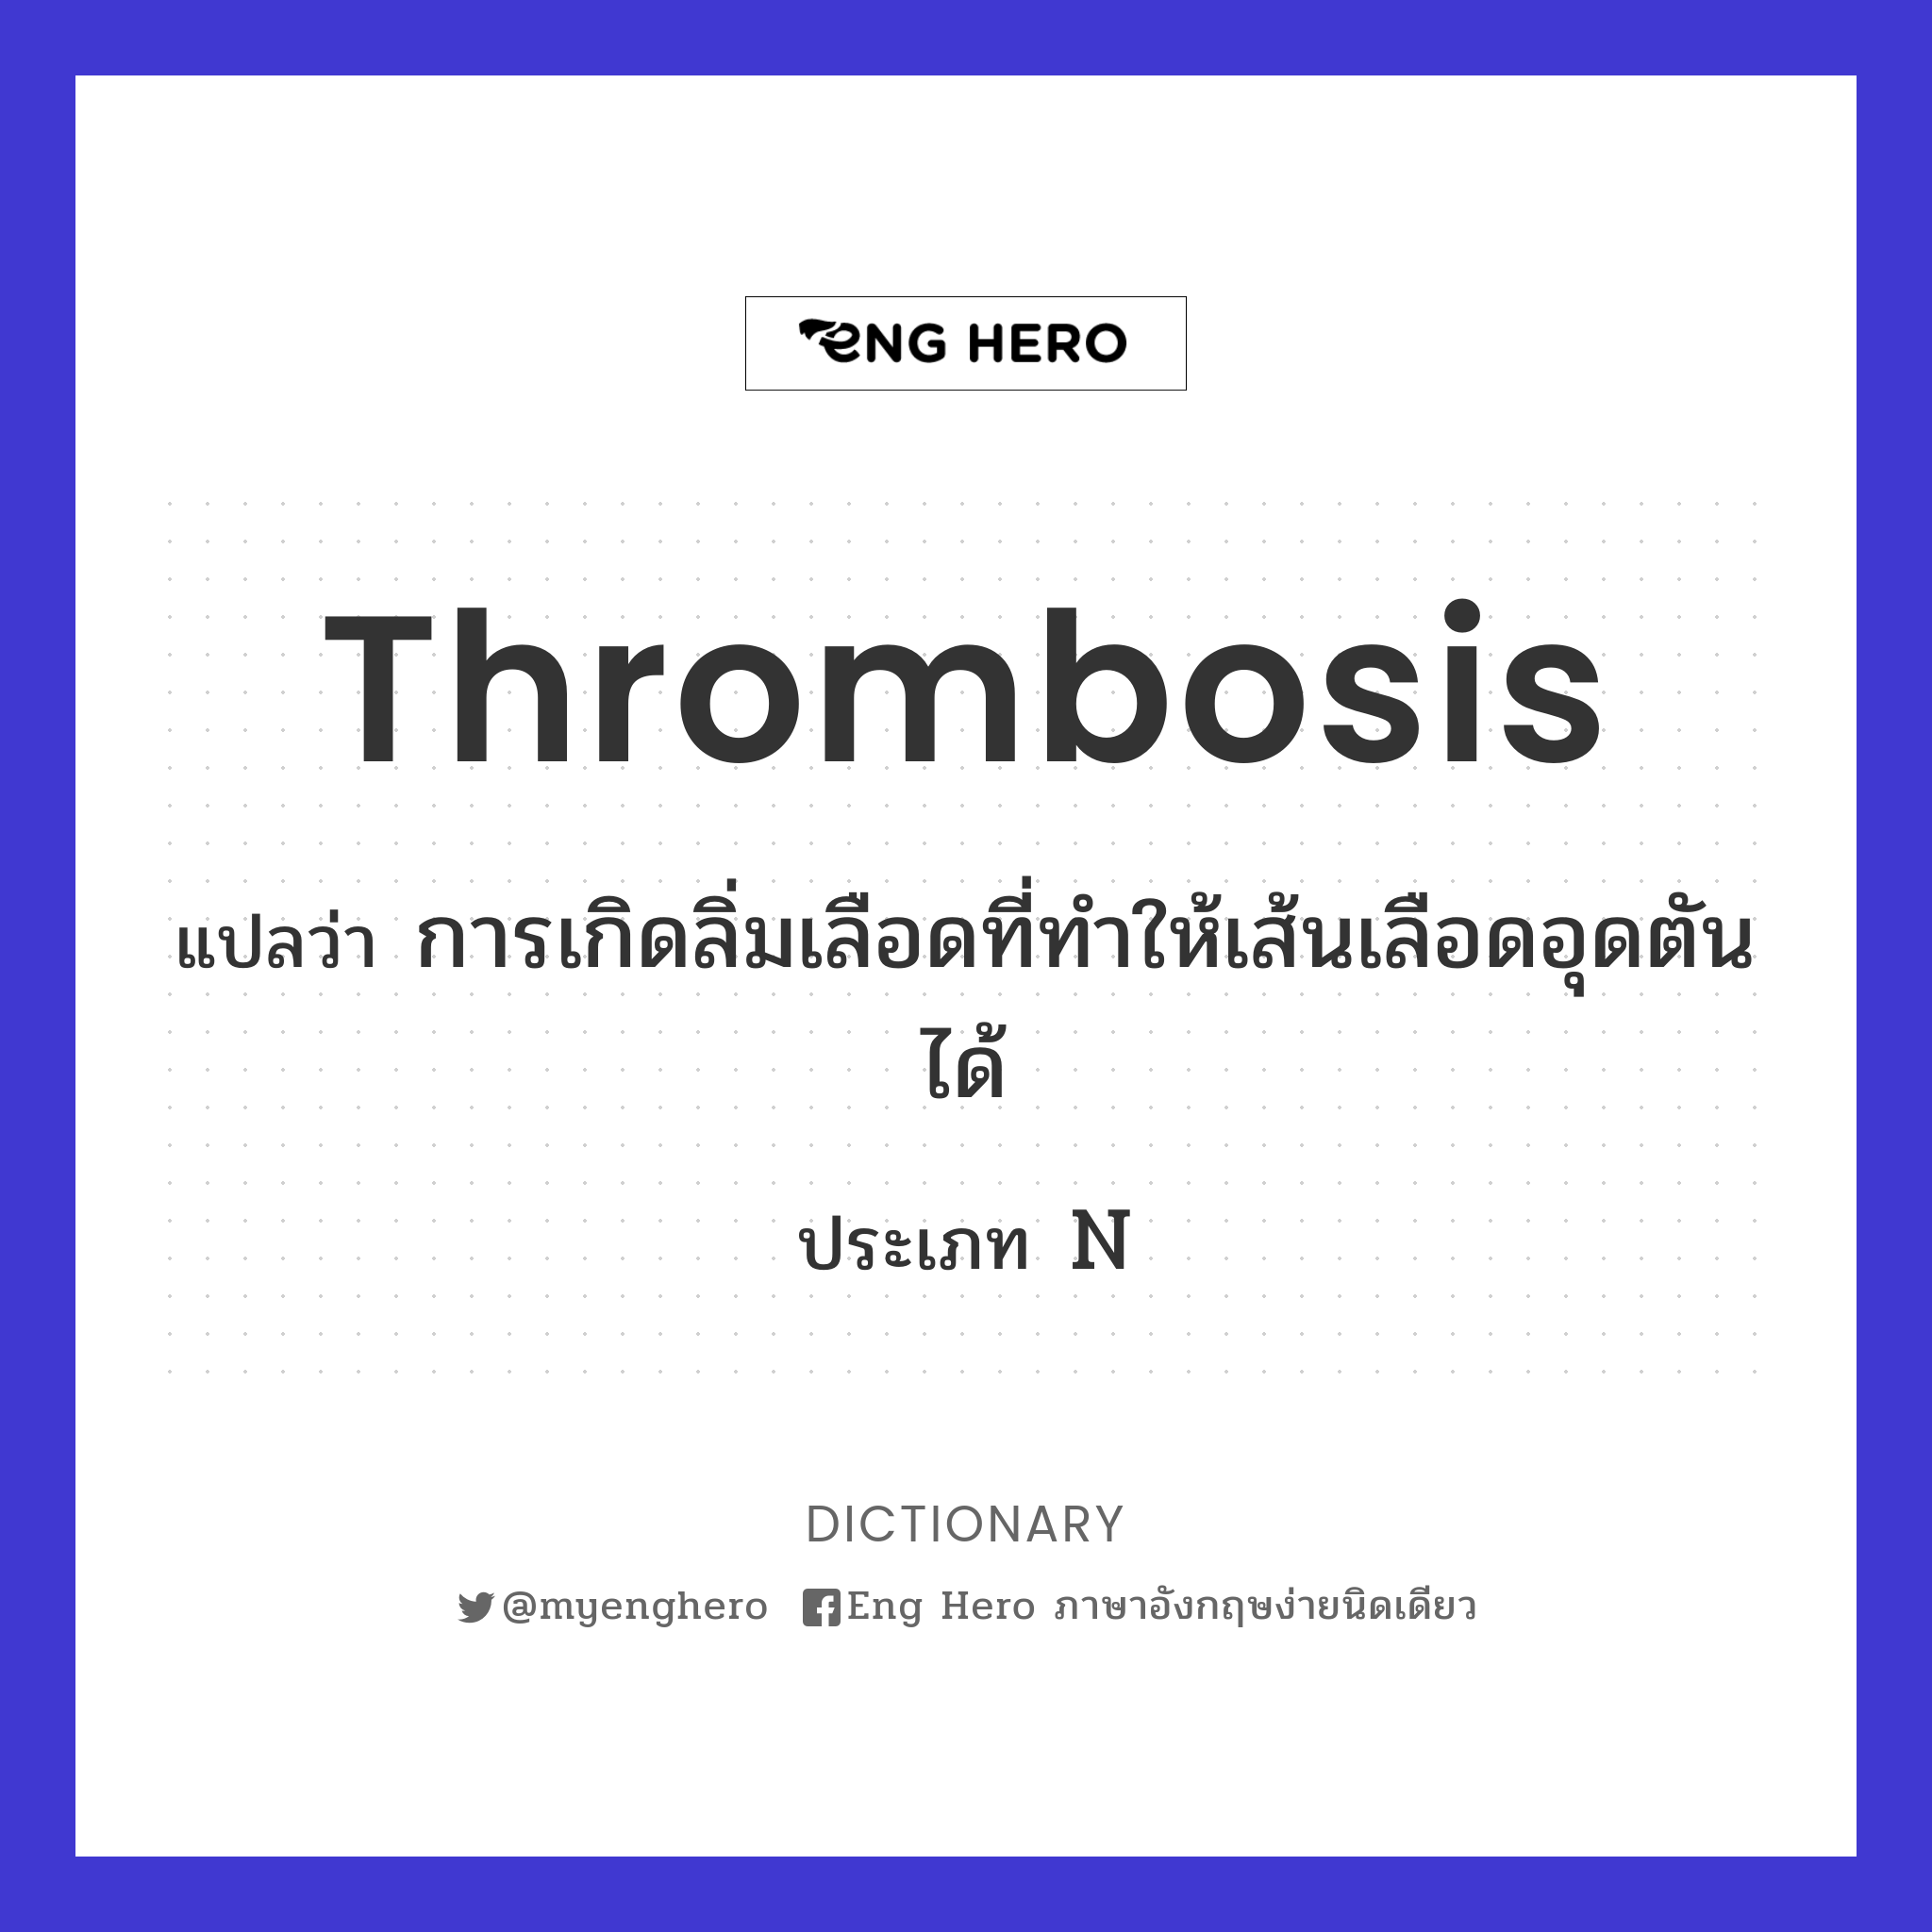 thrombosis